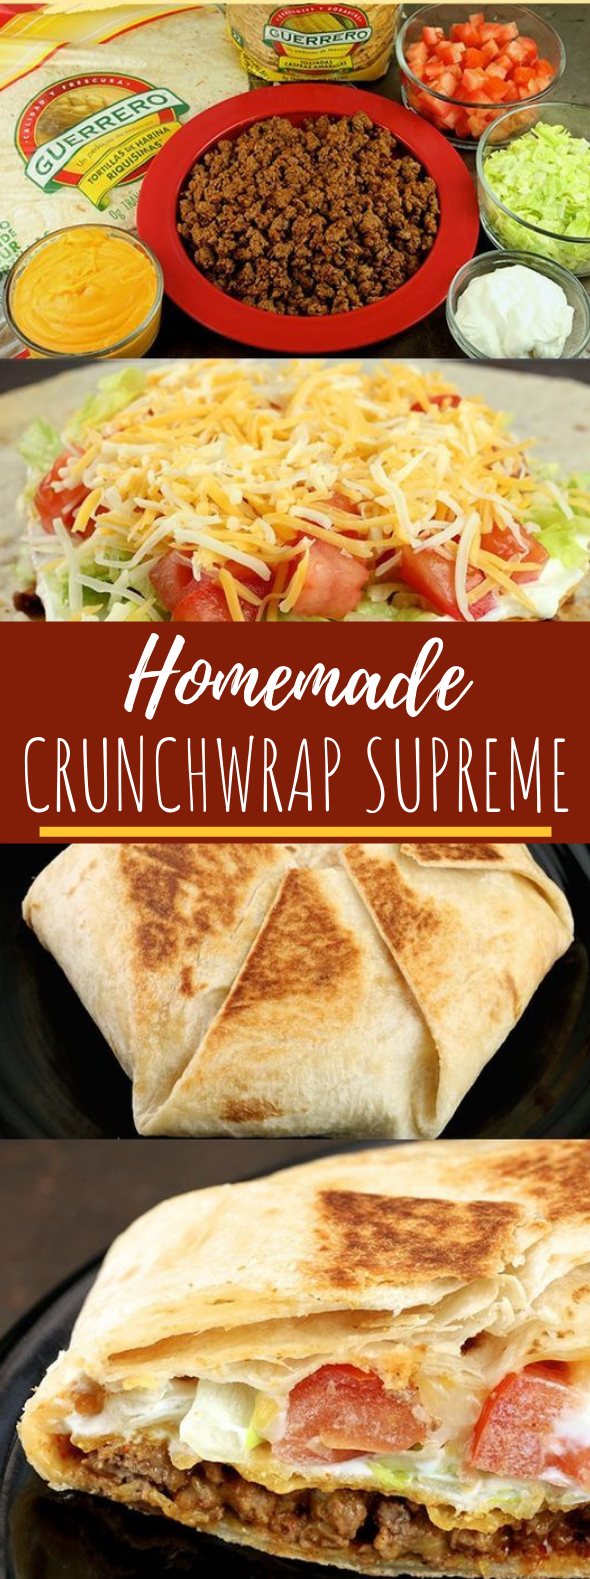 Homemade Crunchwrap Supreme #dinner #lunch